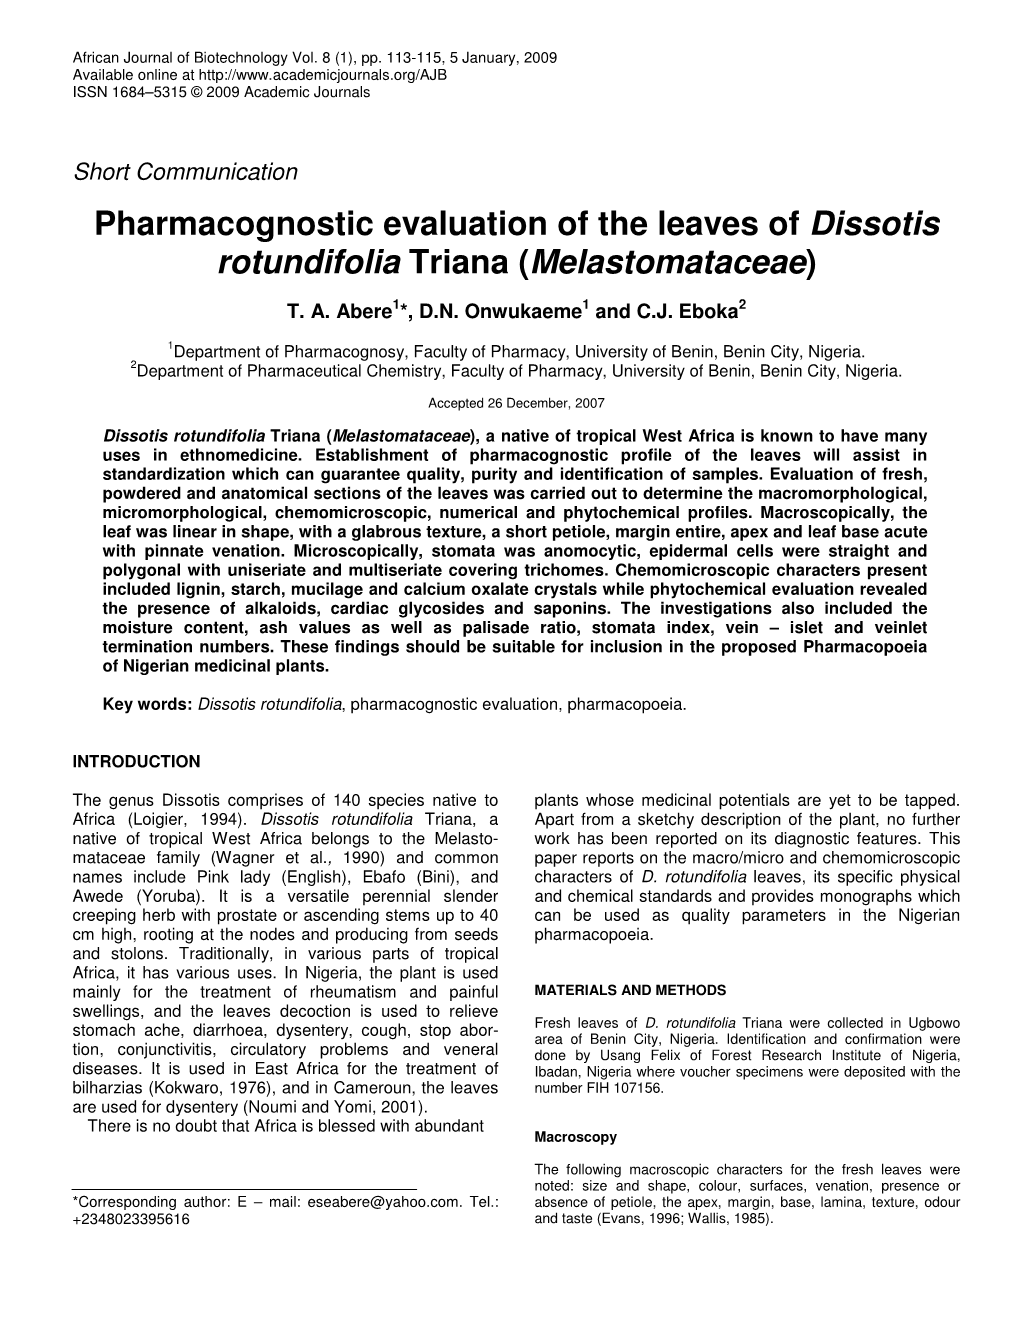 Pharmacognostic Evaluation of the Leaves of Dissotis Rotundifolia Triana (Melastomataceae)